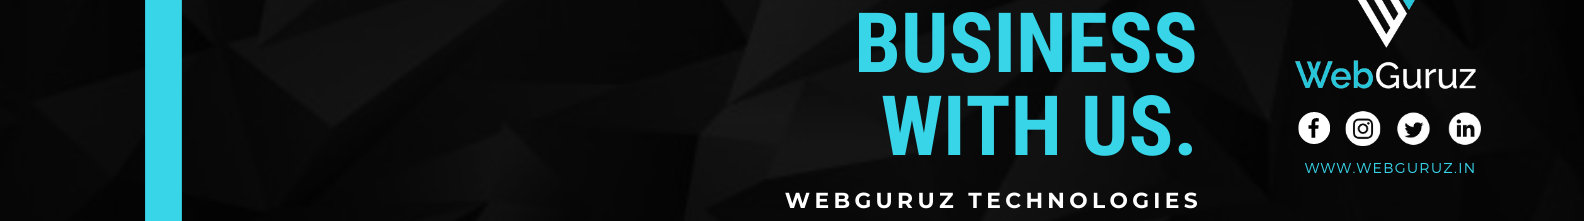 Webguruz tech's profile banner